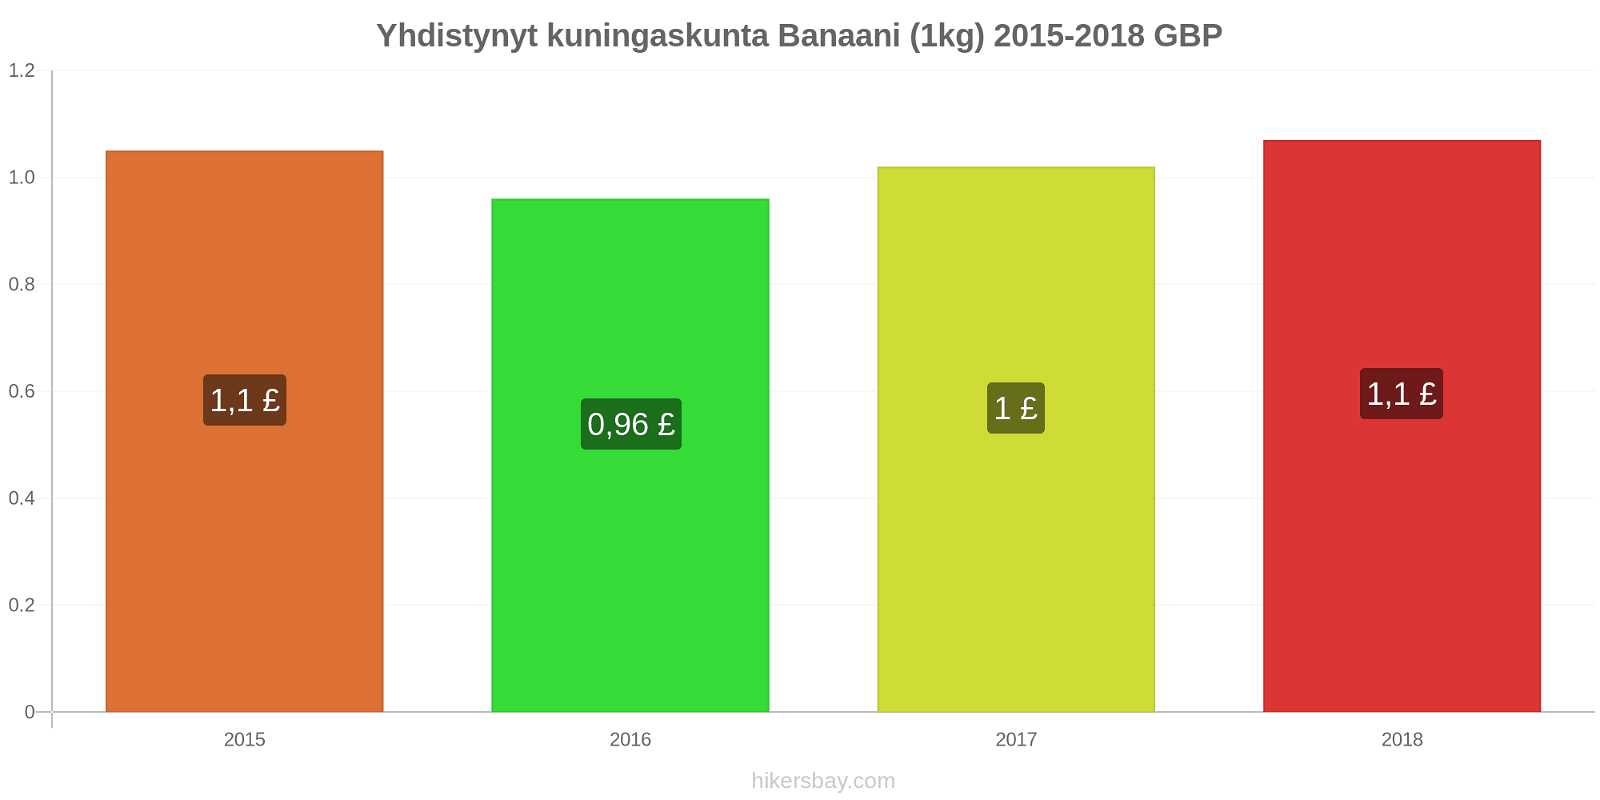 Yhdistynyt kuningaskunta hintojen muutokset Banaani (1kg) hikersbay.com